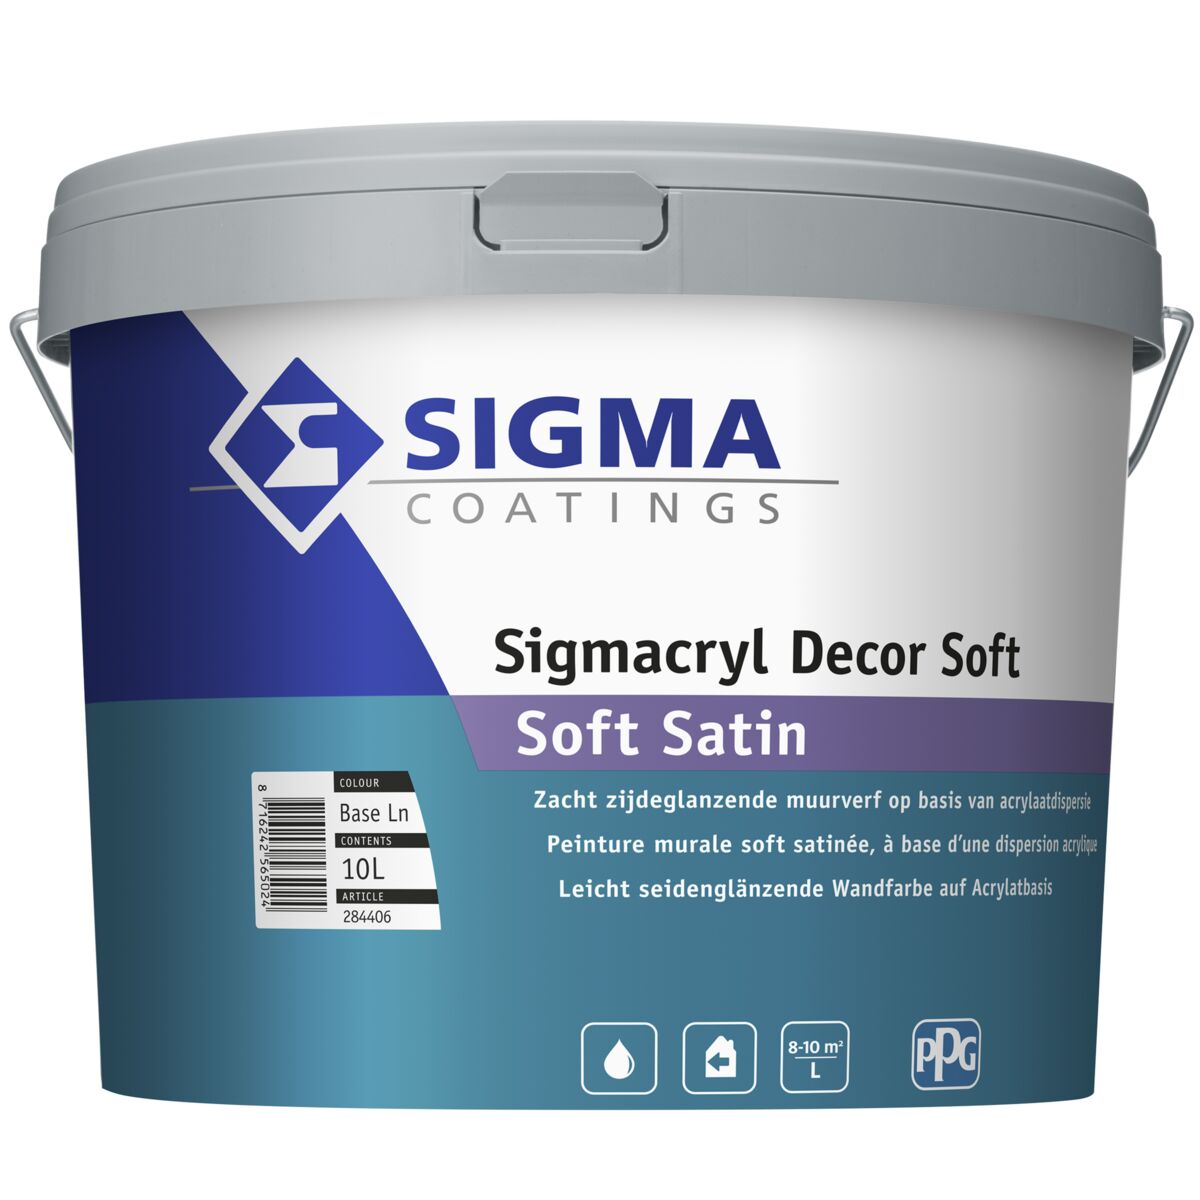 Sigmacryl Decor Soft